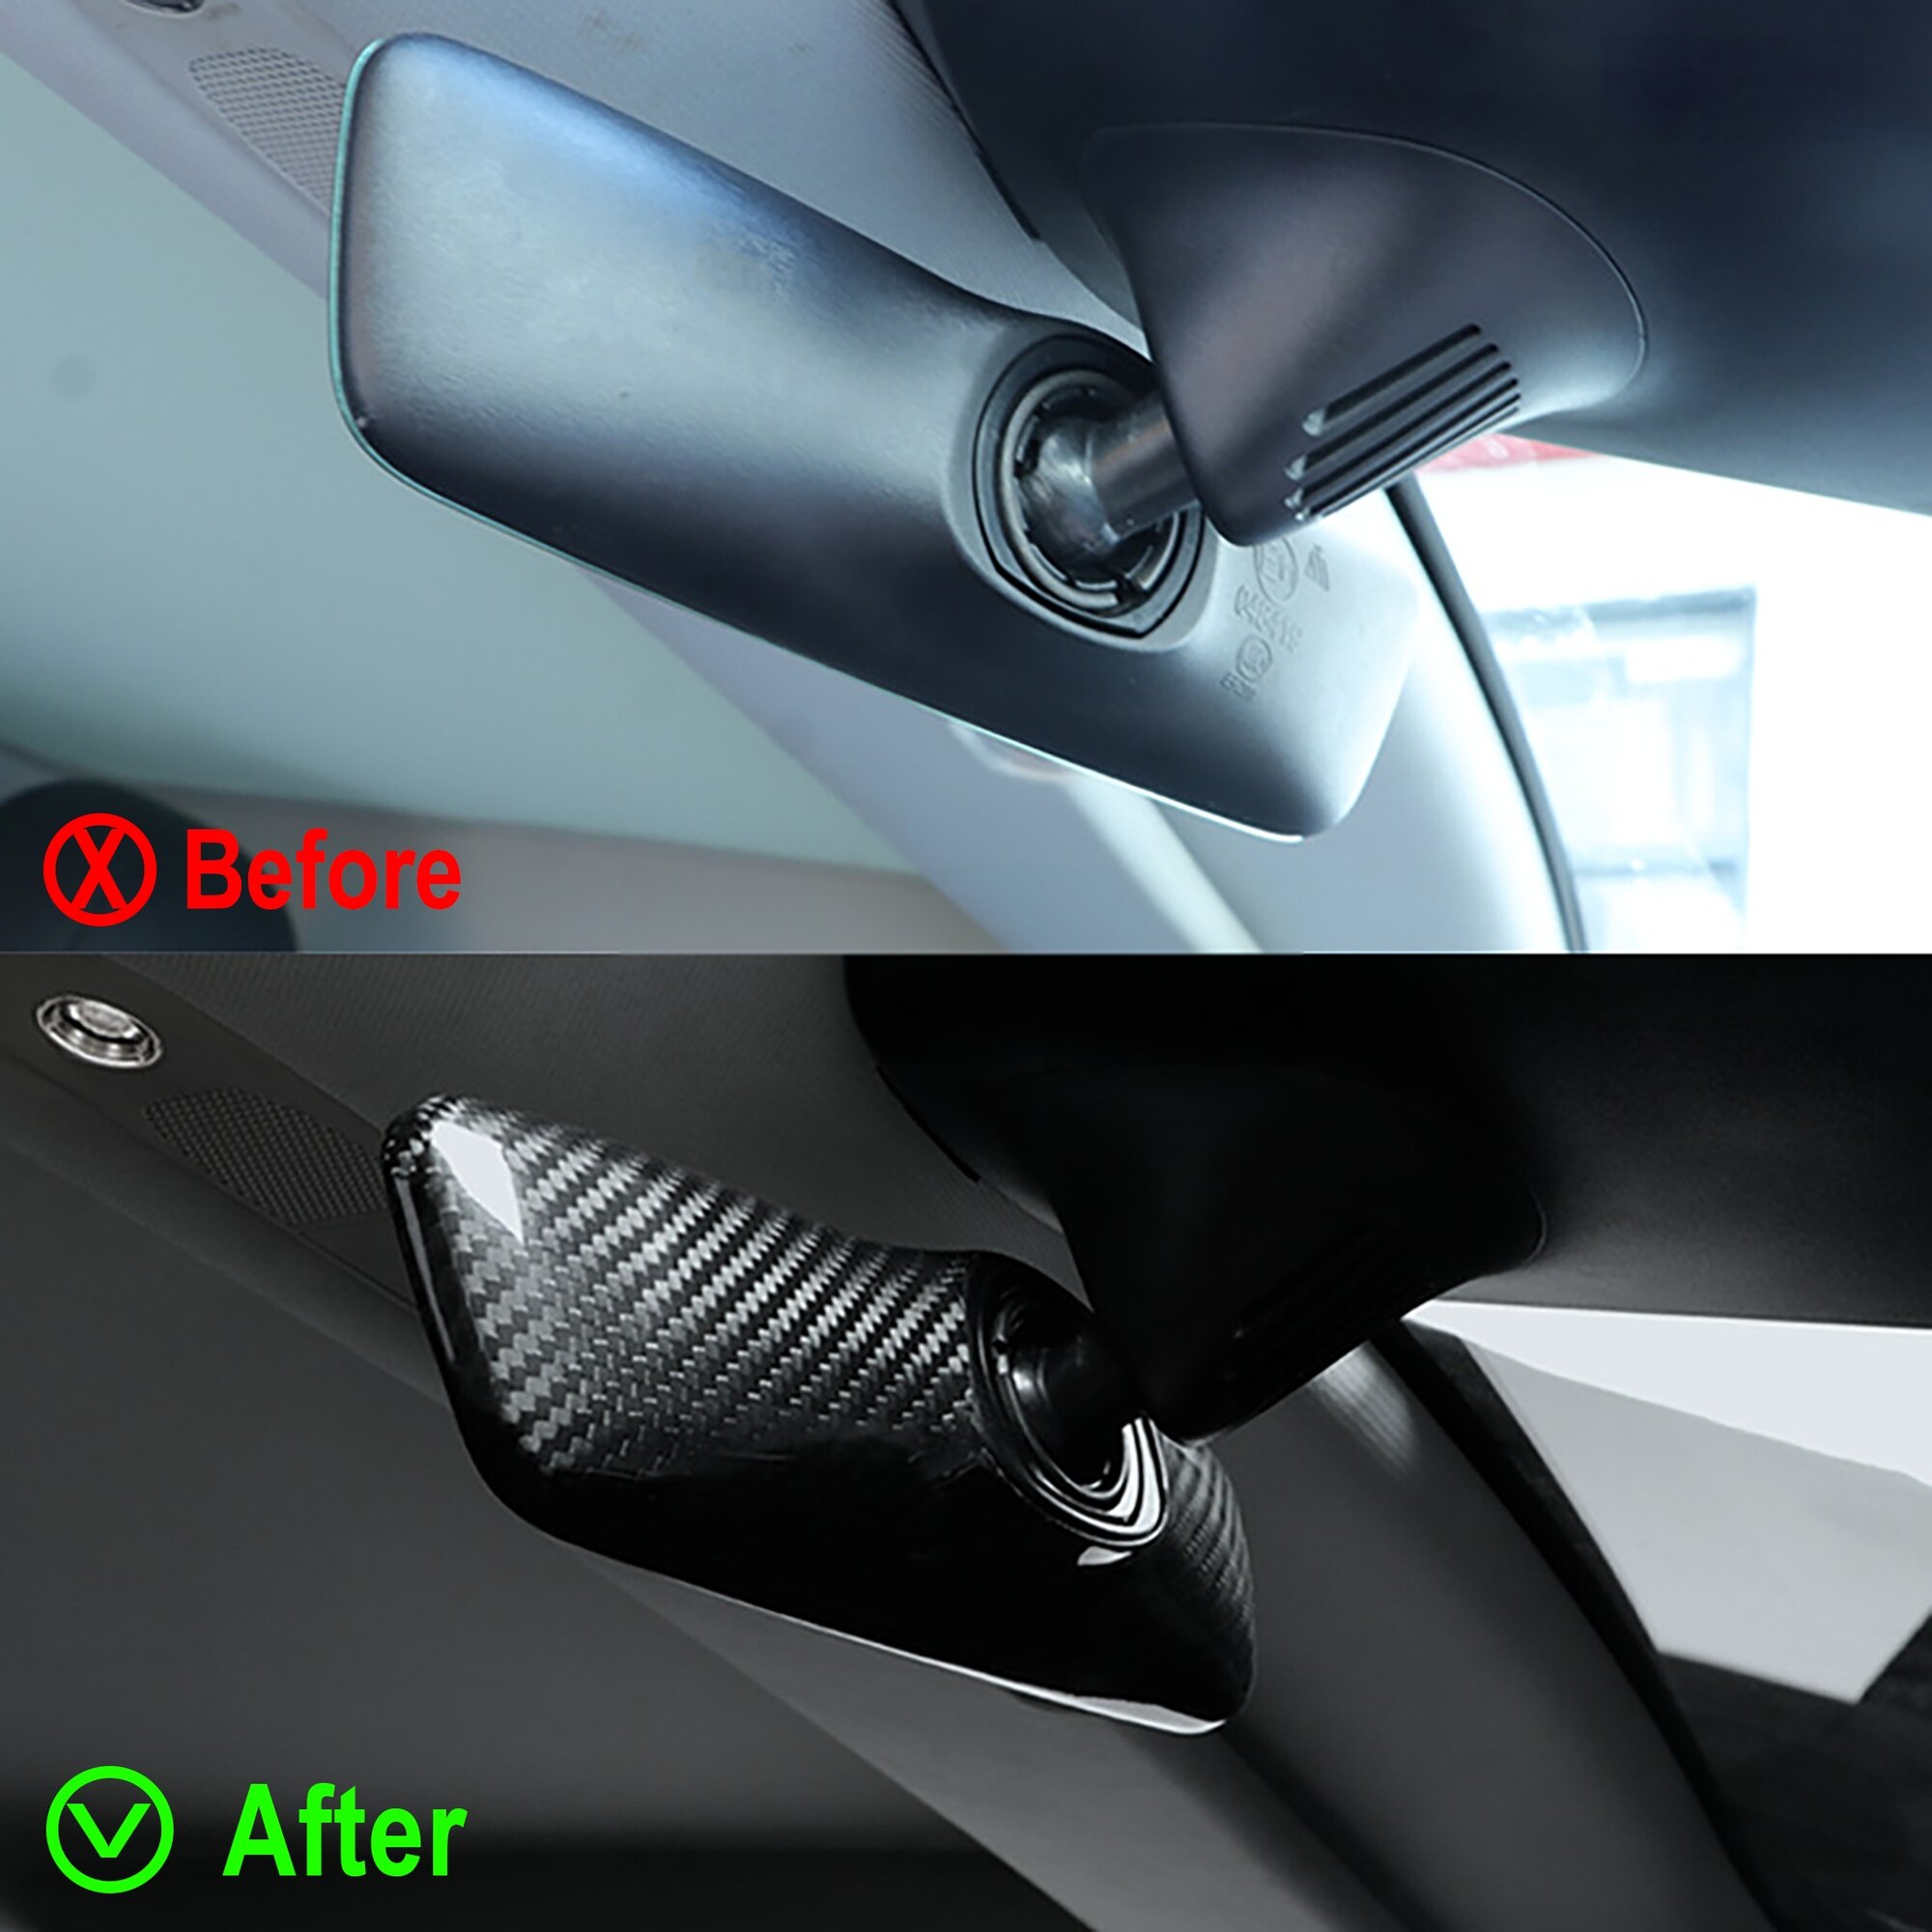 Carbon Fiber Side Camera Covers For Tesla Model X/S & New Model 3 – Yeslak